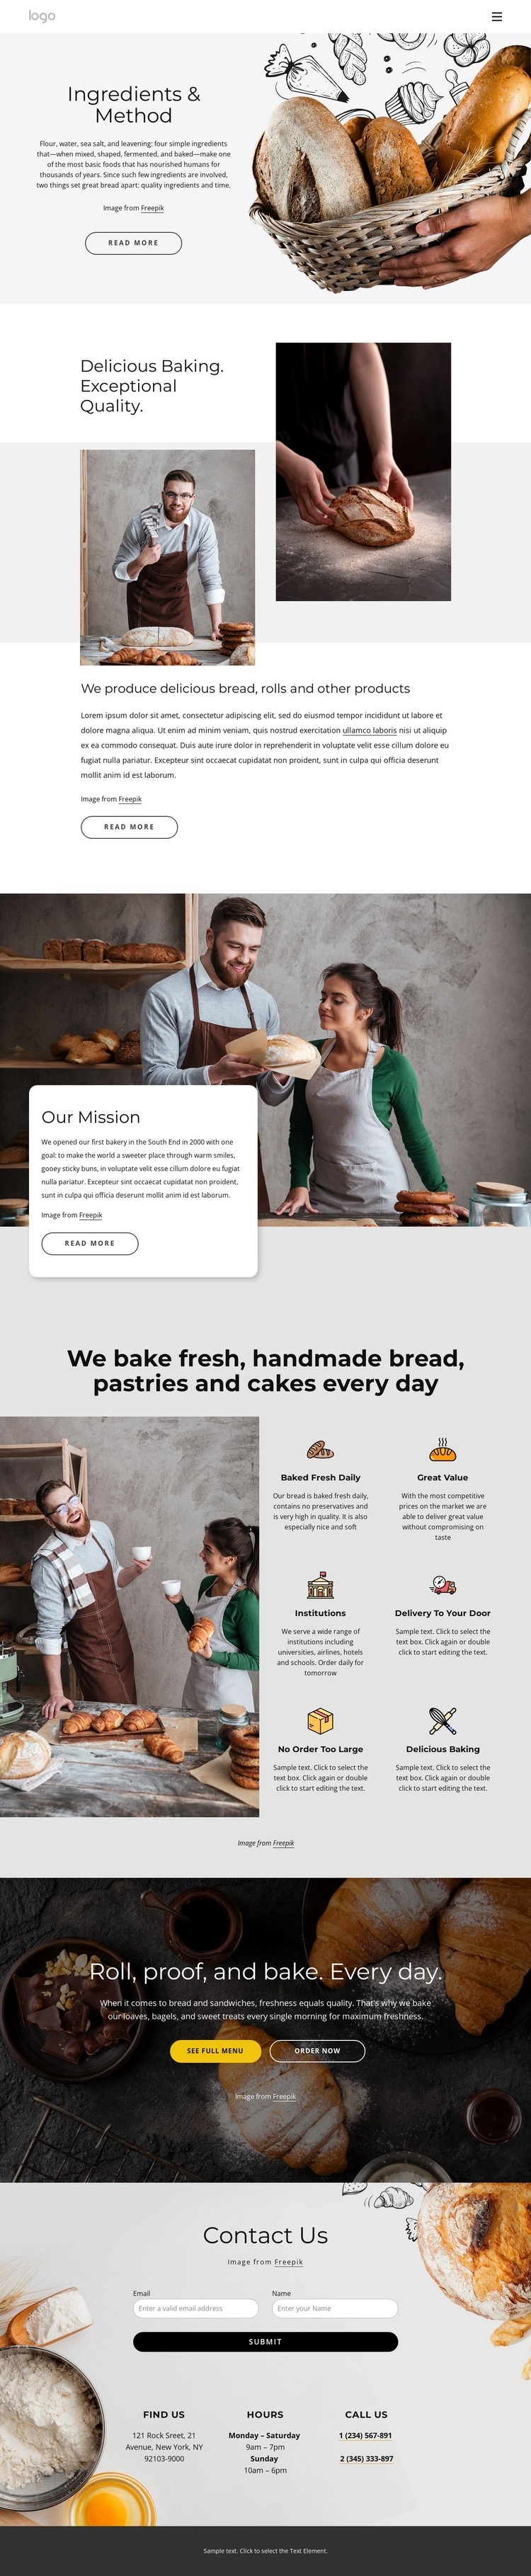 We bake handmade bread Homepage Design